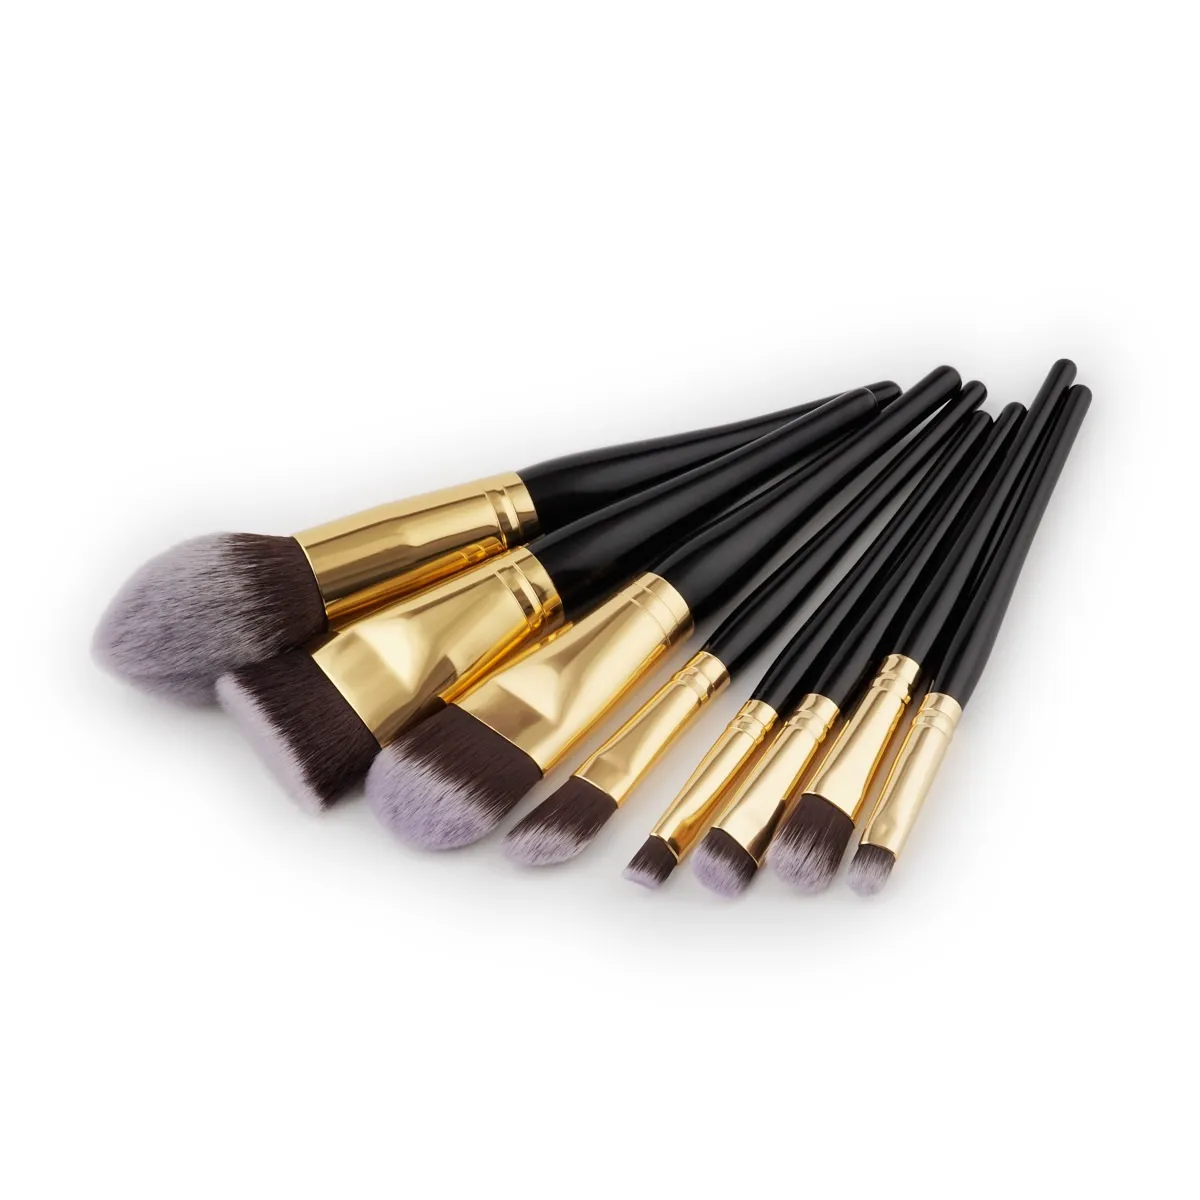 Premium Makeup brushes set 8pcs Soft Synthetic Hair Brush Professional Makeup Artist Brush Tool Makeup Brush Kit Tools DHL Free